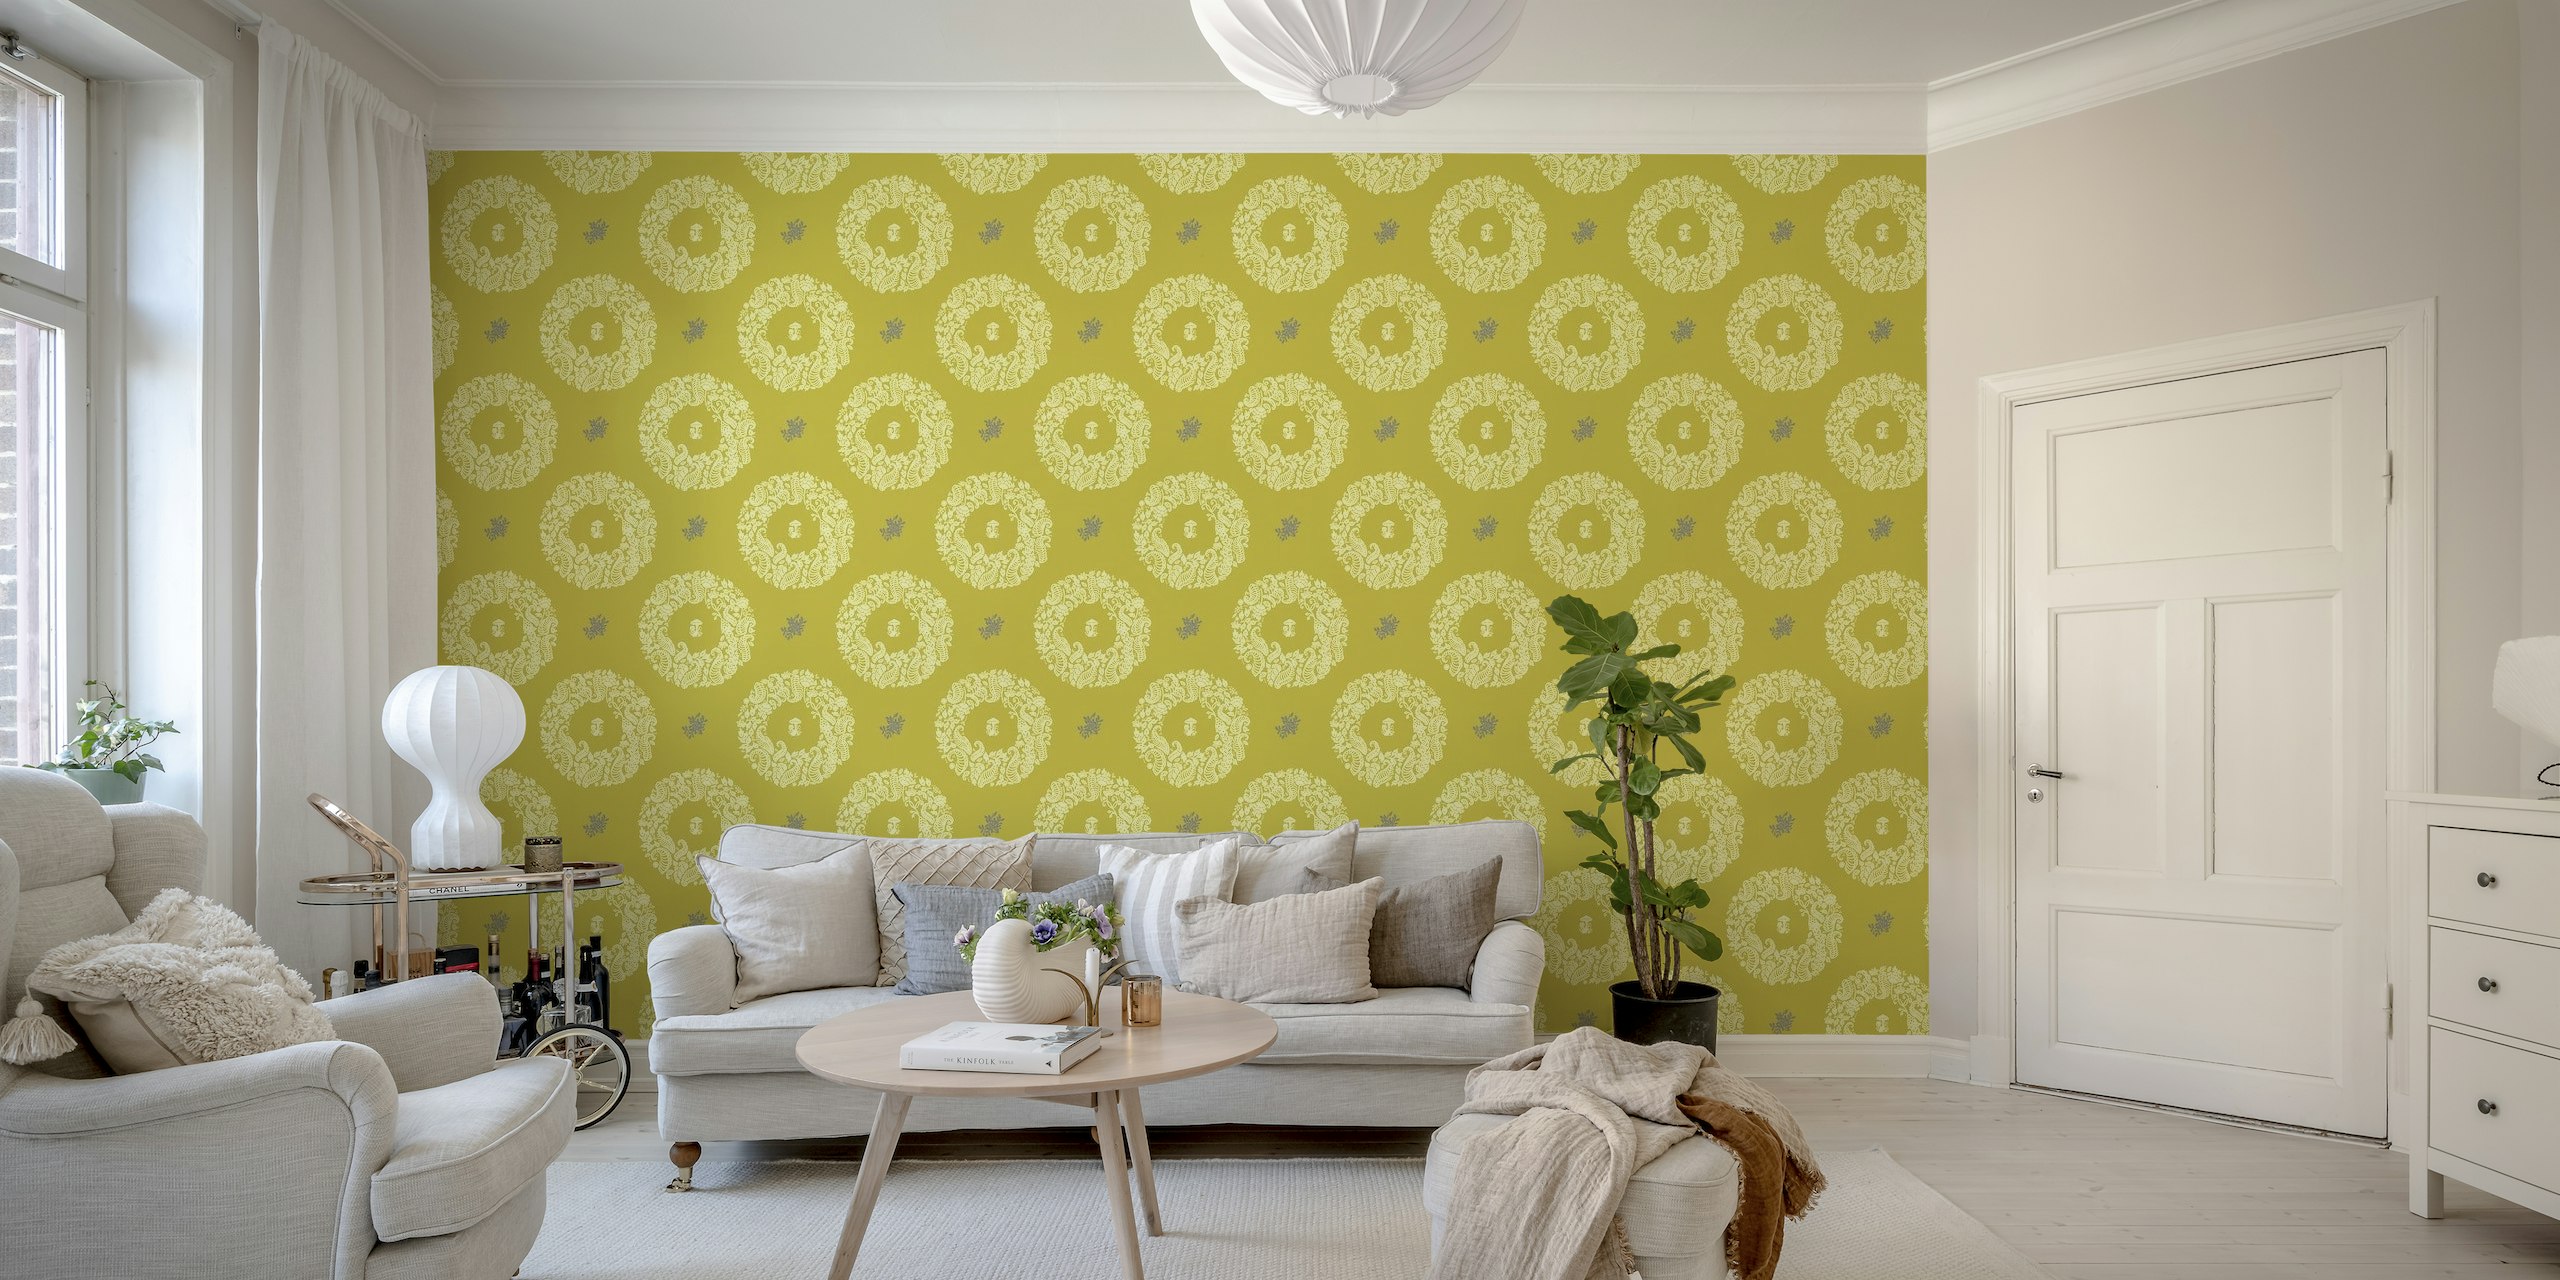 Scandi krans muurschildering op gele achtergrond met witte botanische patronen